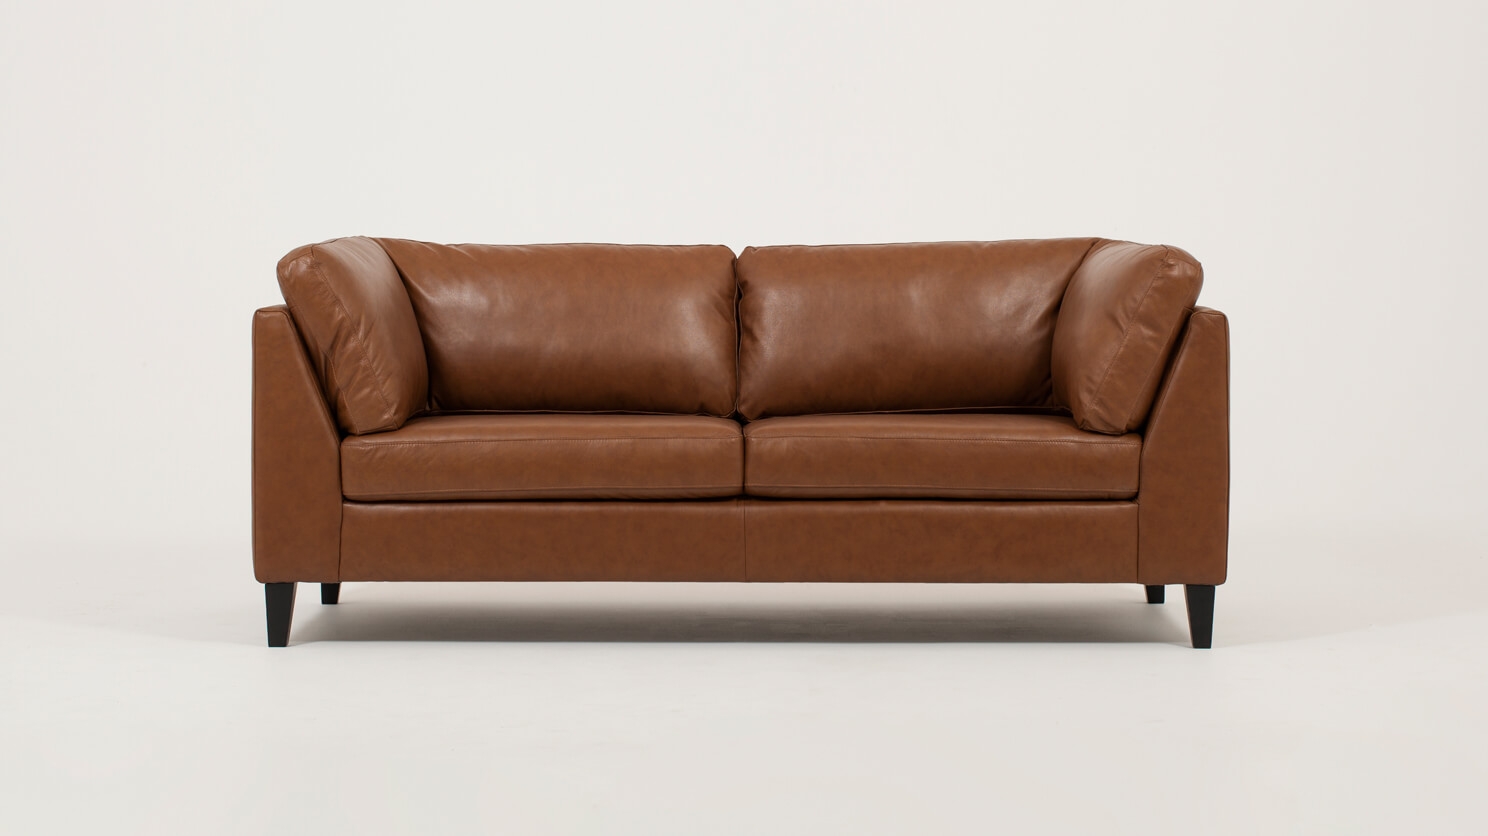 60 inch apartment sofa leather